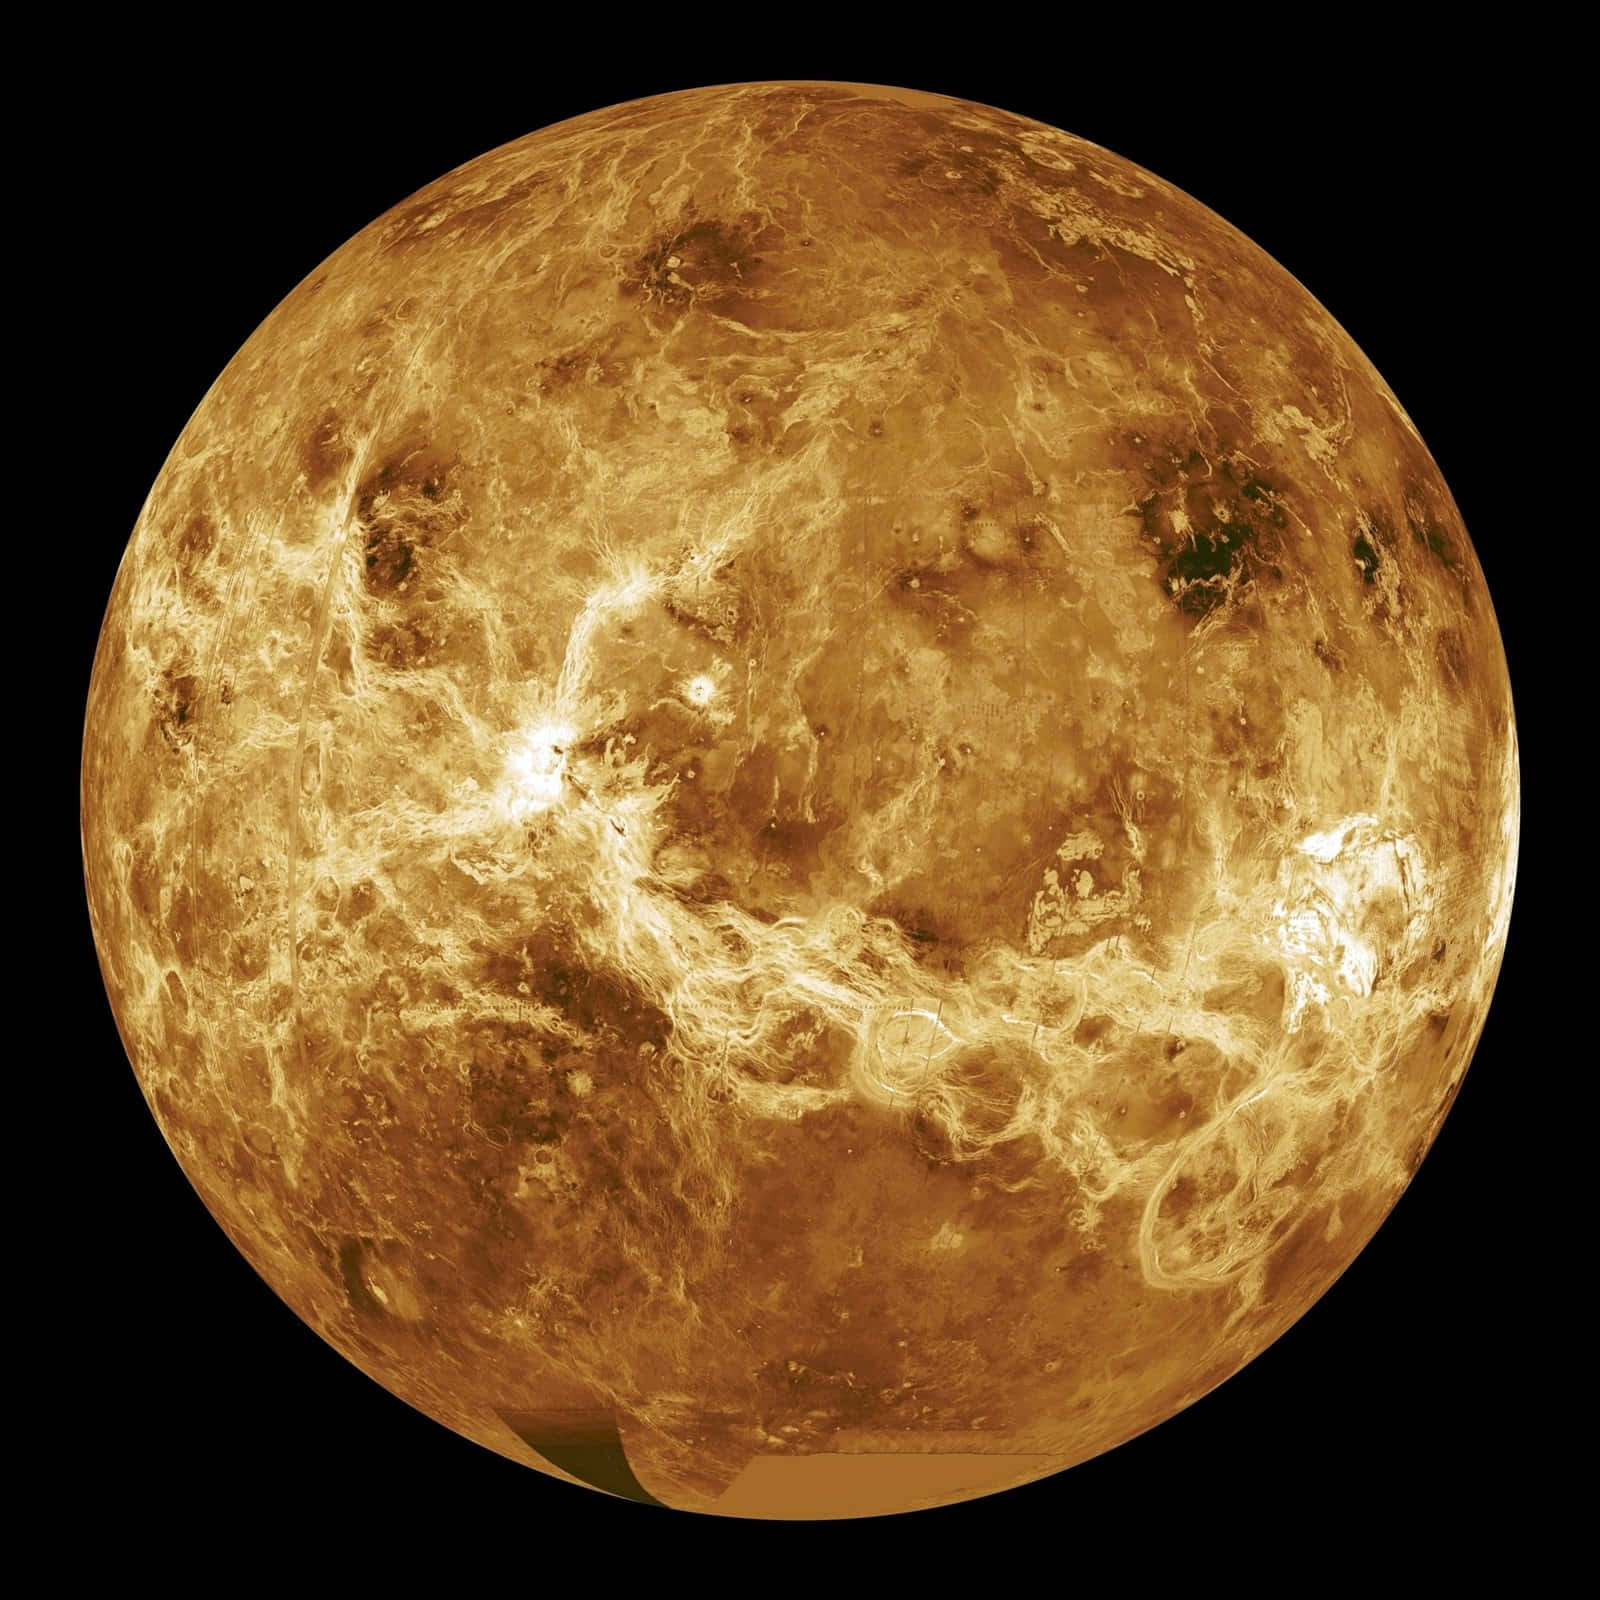 Enbild Av Jordens Systerplanet, Venus.